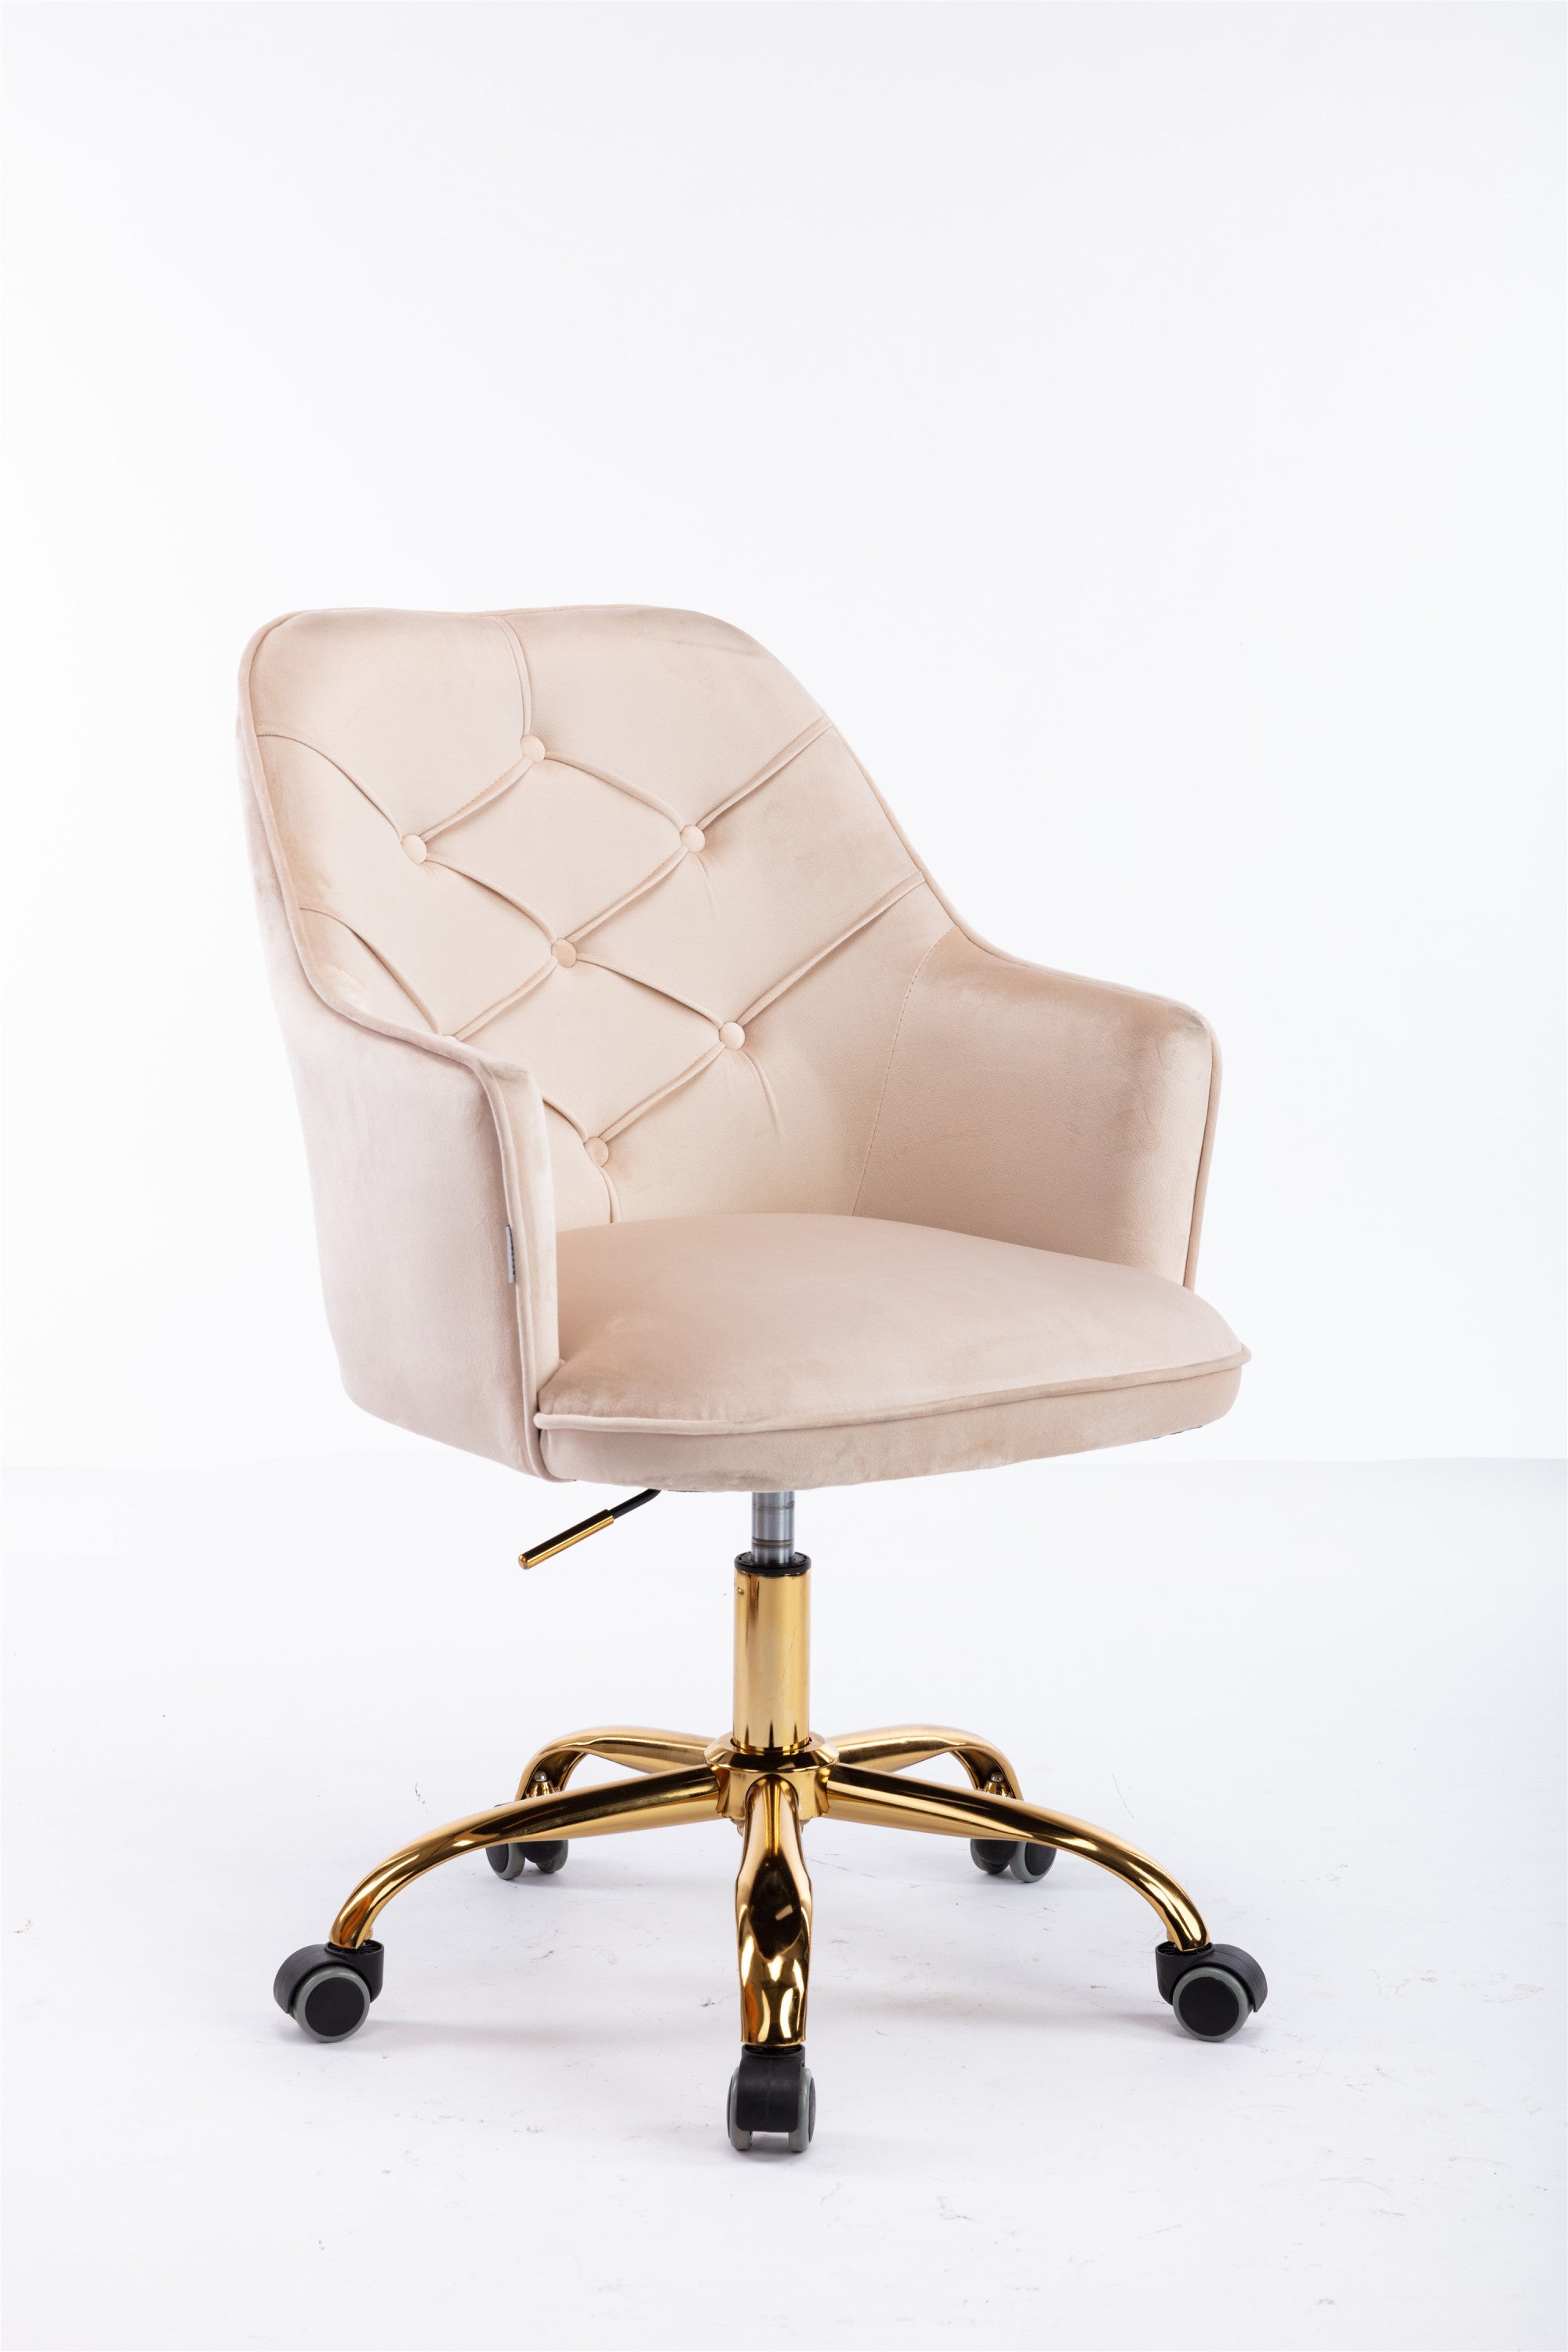 NOBLEMOOD Velvet Swivel Shell Chair for Living Room Modern Leisure Armchair with Wheels for Home Sturdy Room, Light Pink